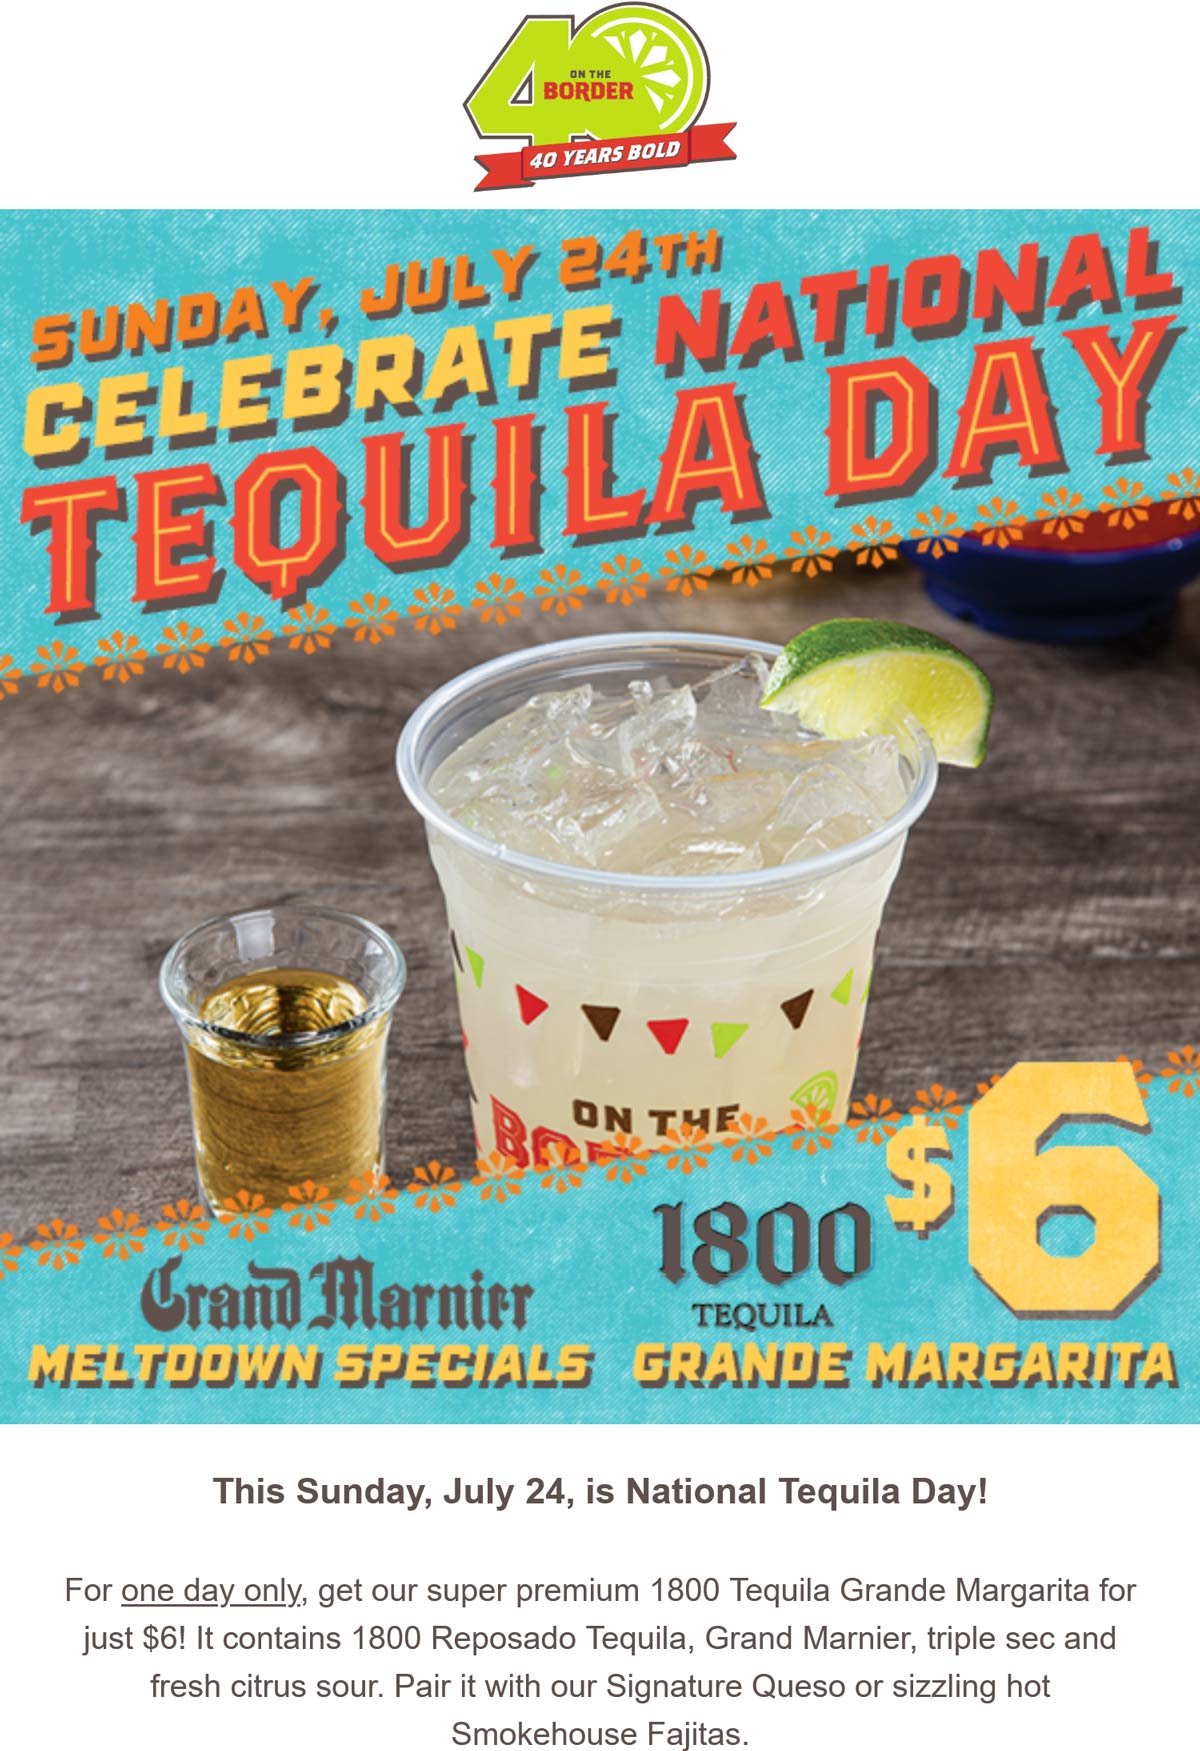 On The Border restaurants Coupon  $6 premium 1800 Tequila Grande Margarita today at On The Border restaurants #ontheborder 